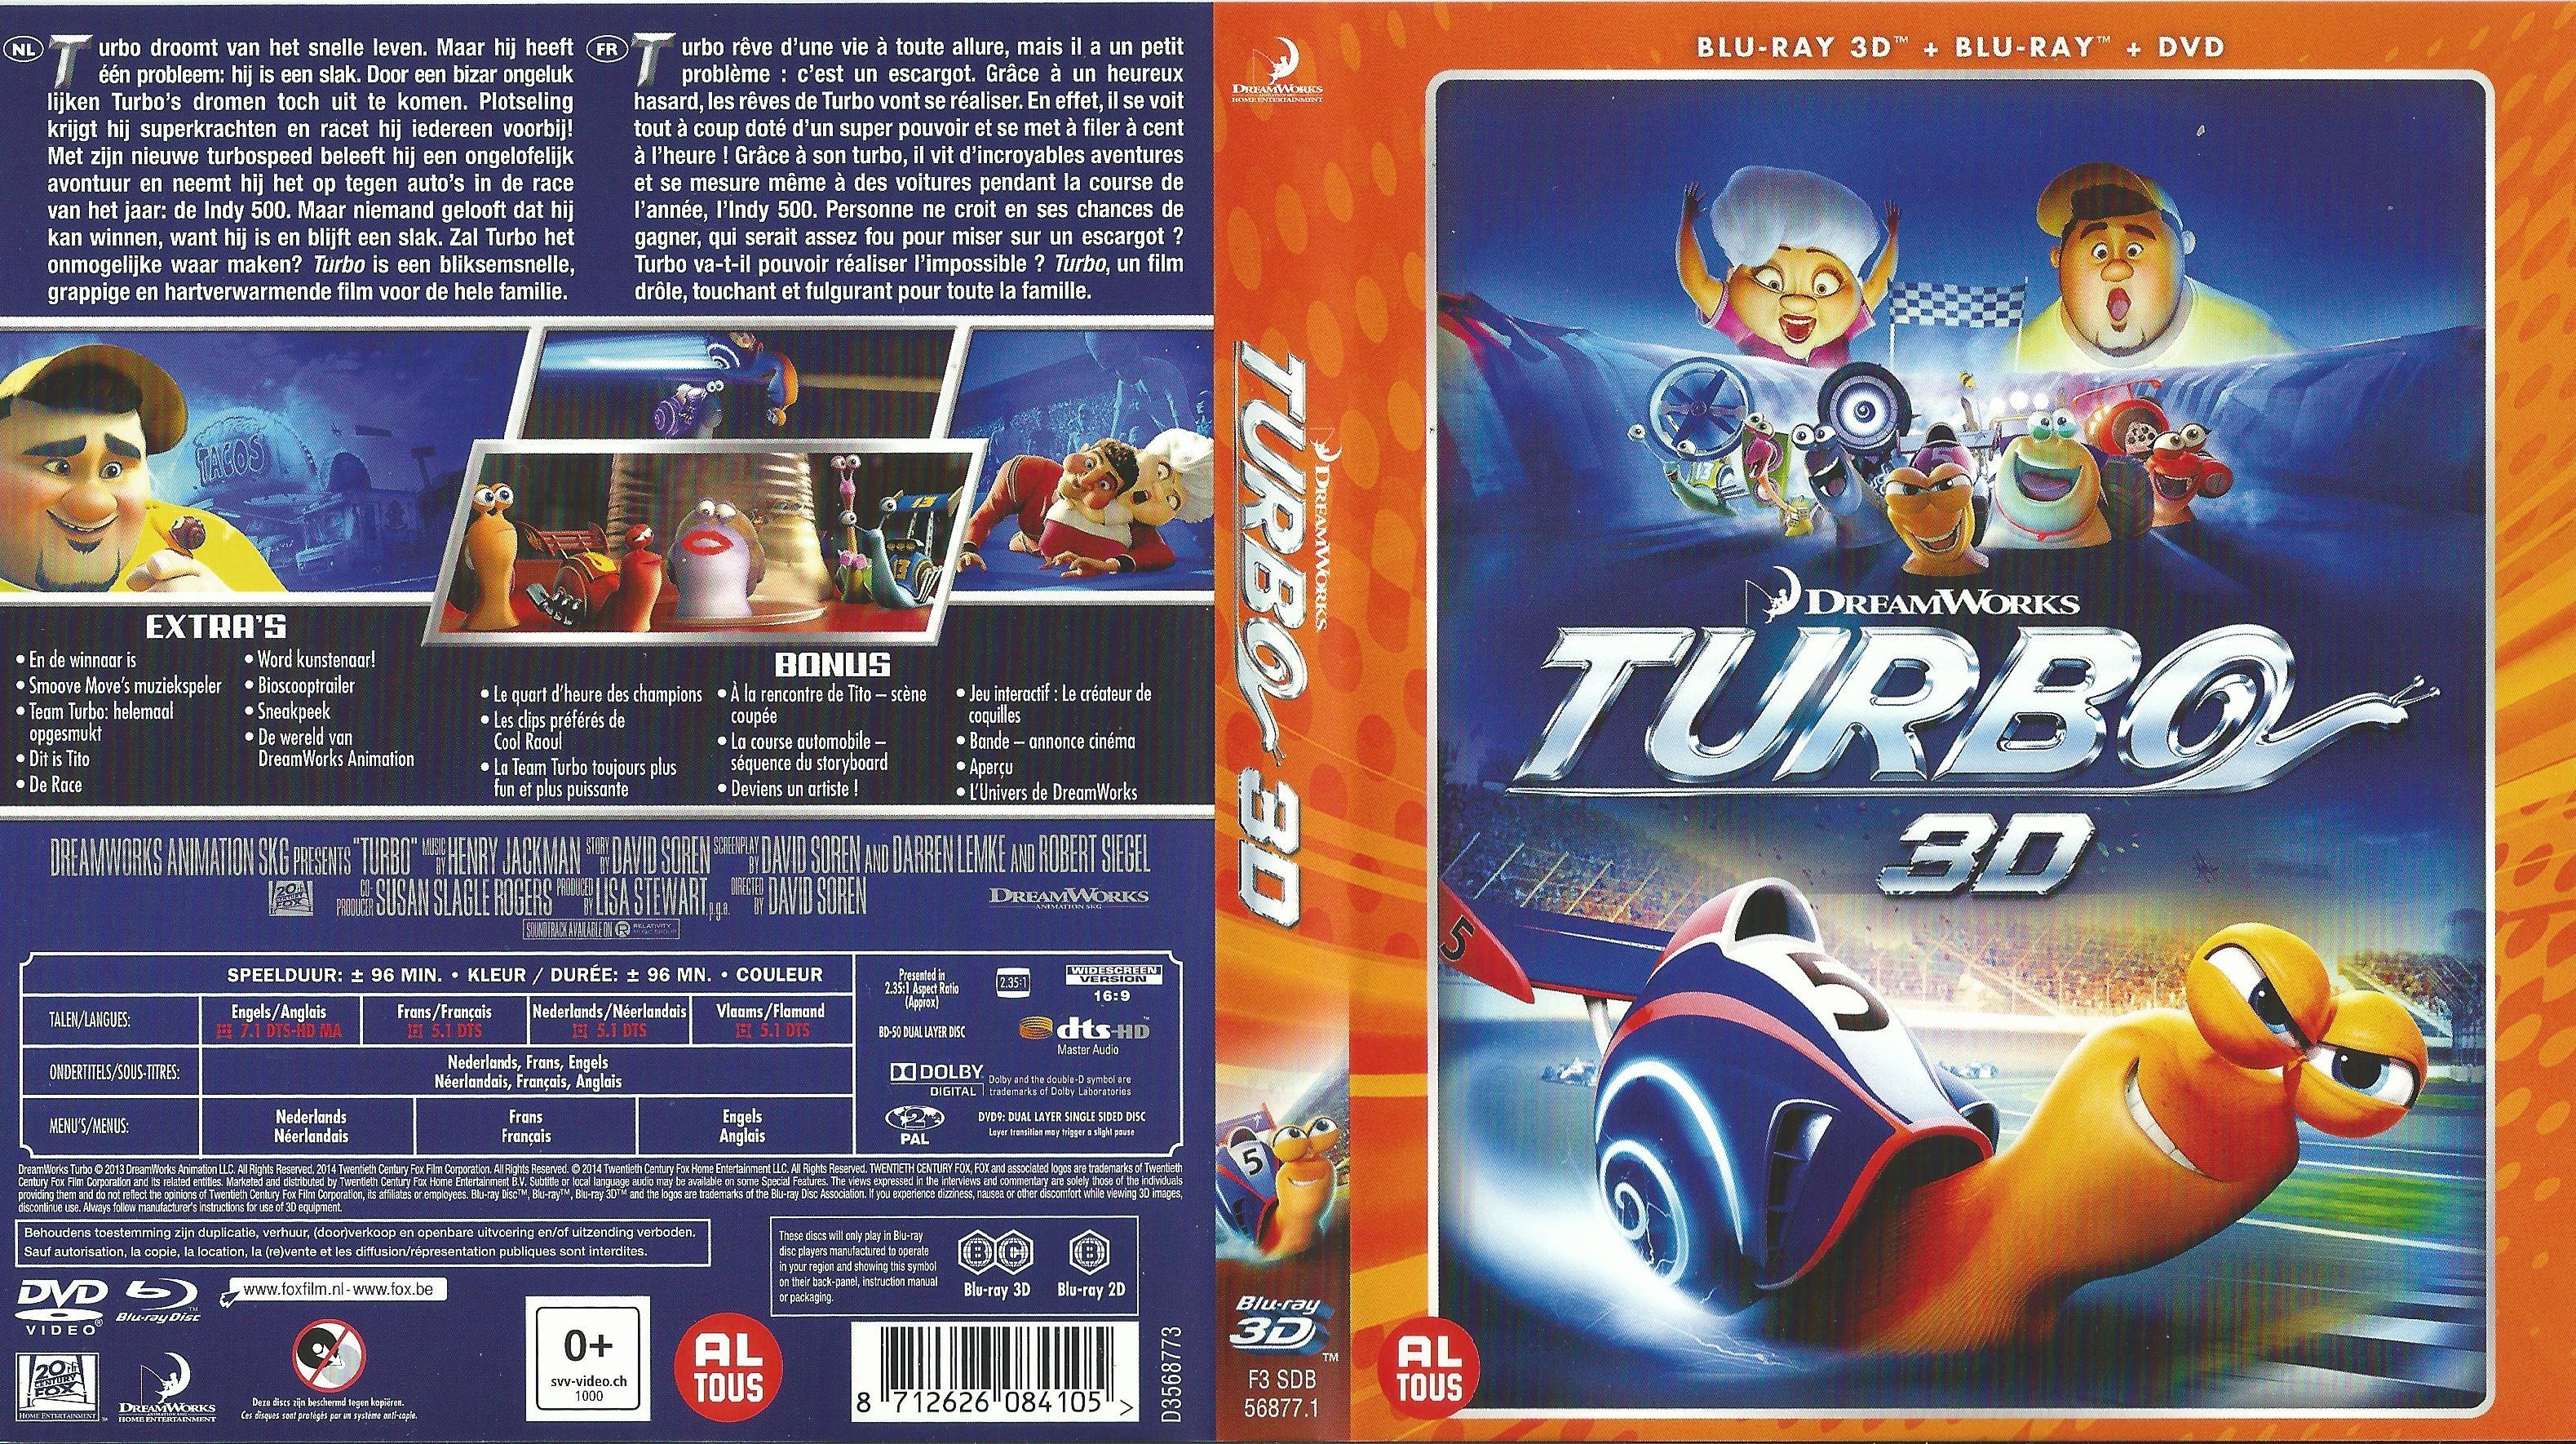 Jaquette DVD Turbo 3D (BLU-RAY)